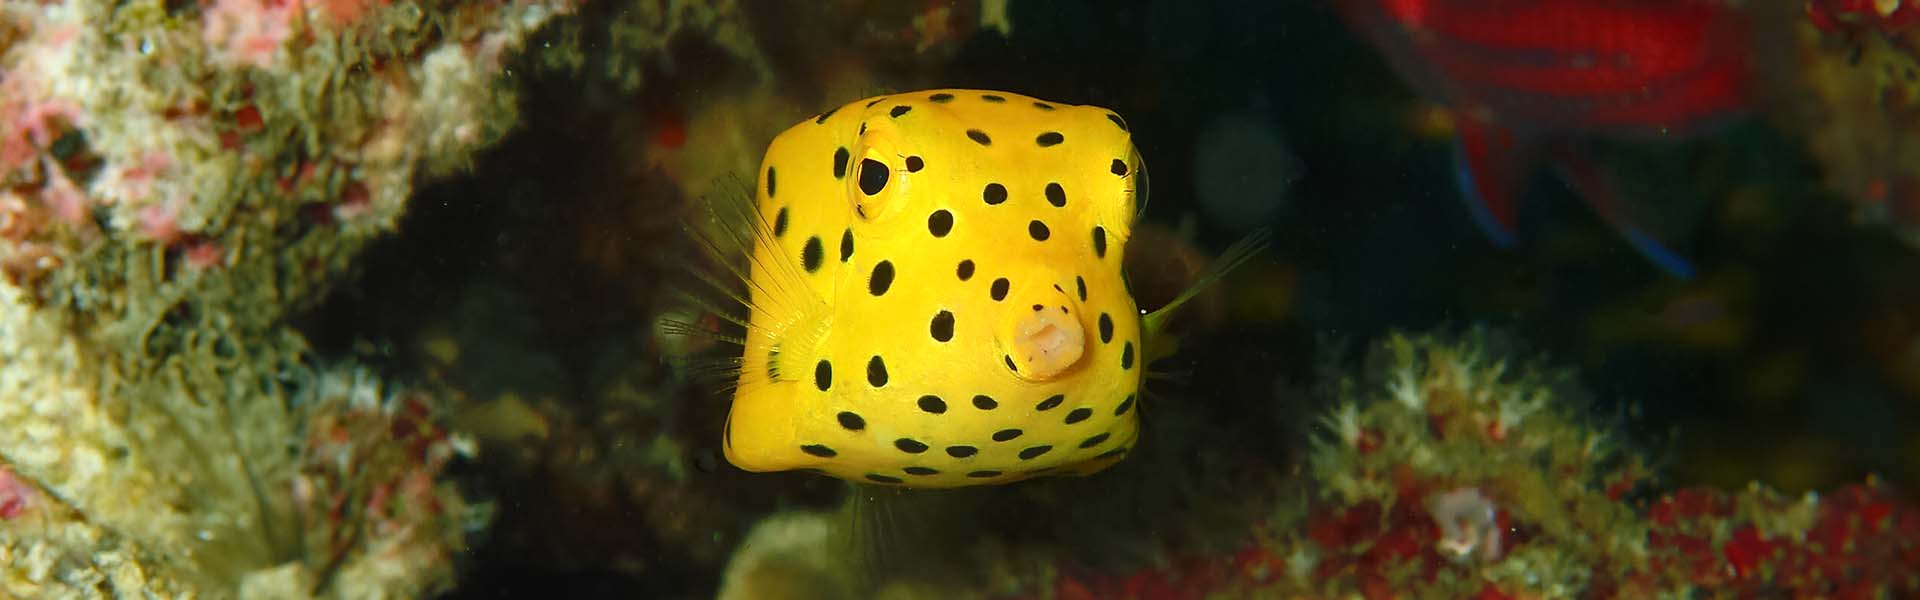 Boxfish / Kofferfisch